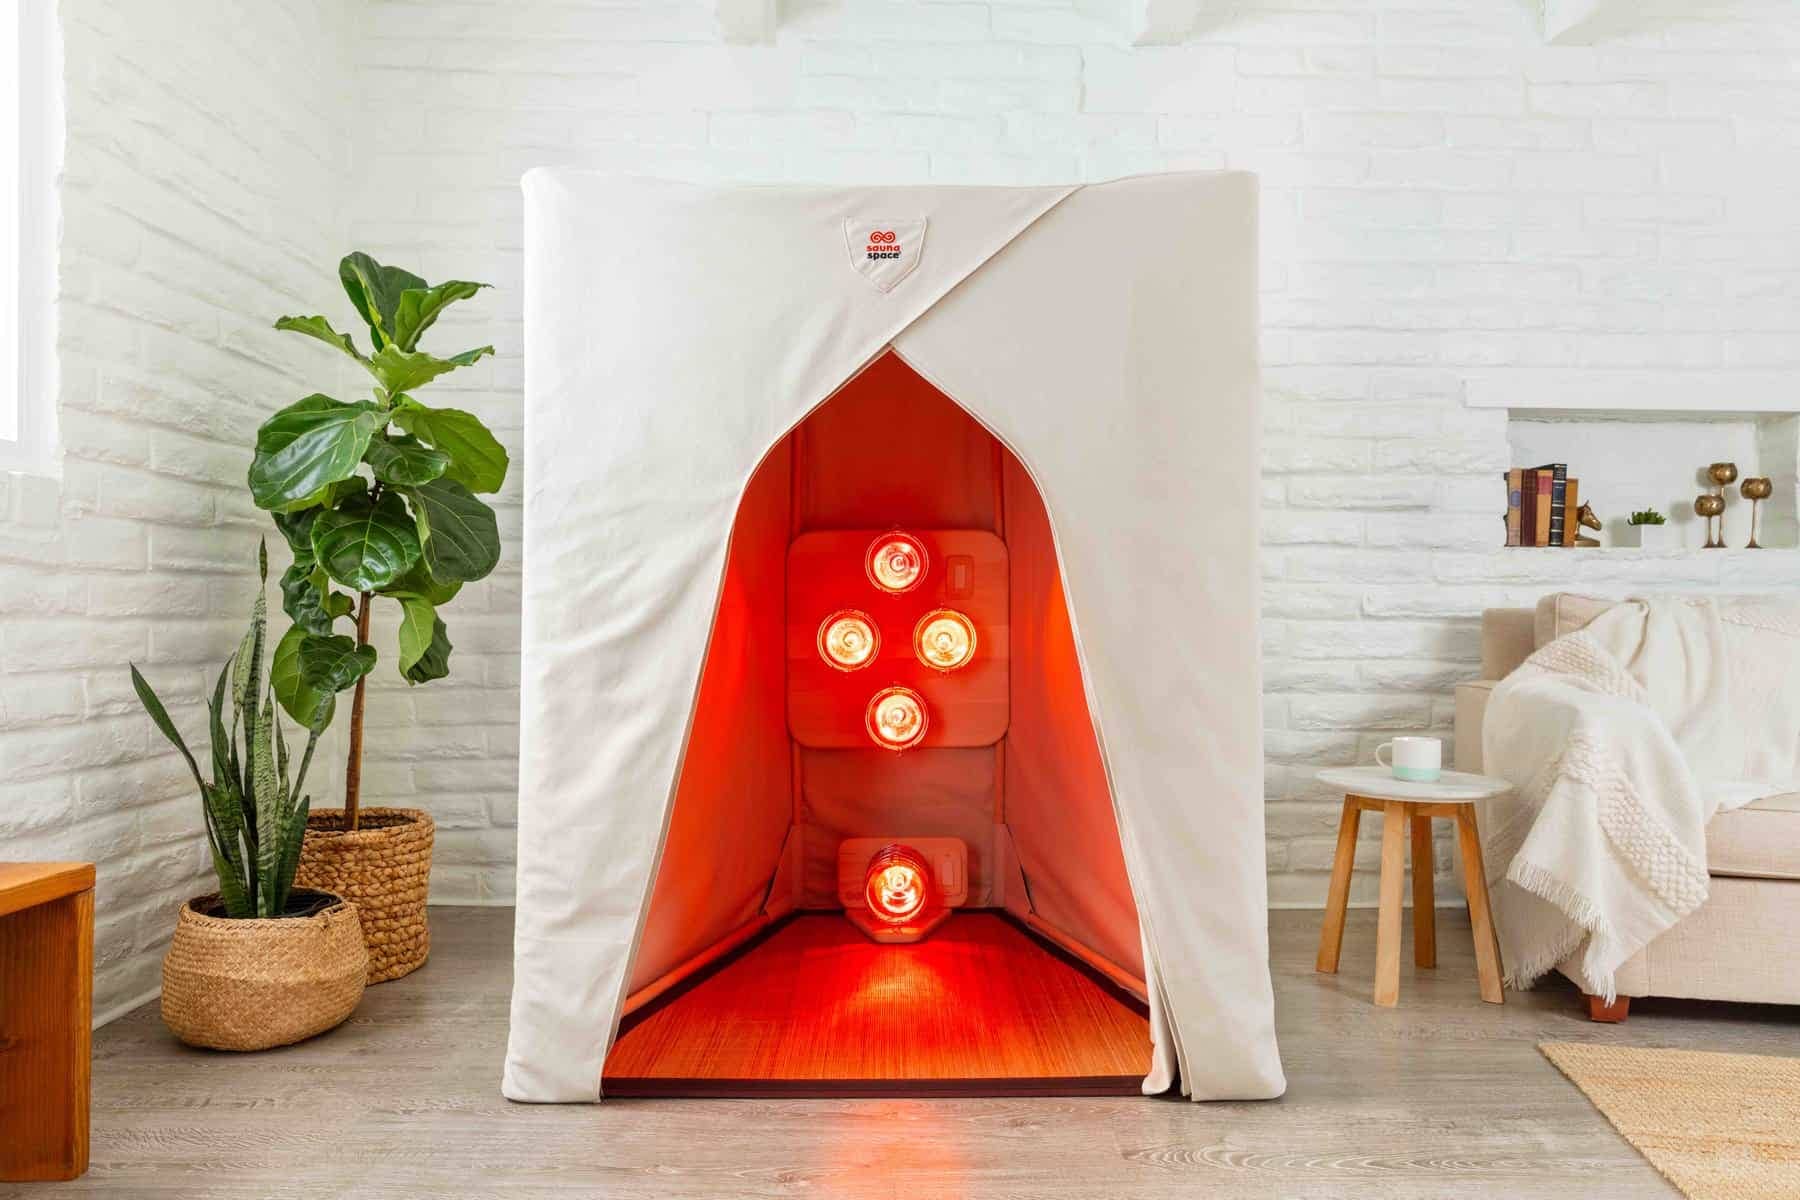 infrared sauna benefits sauna space